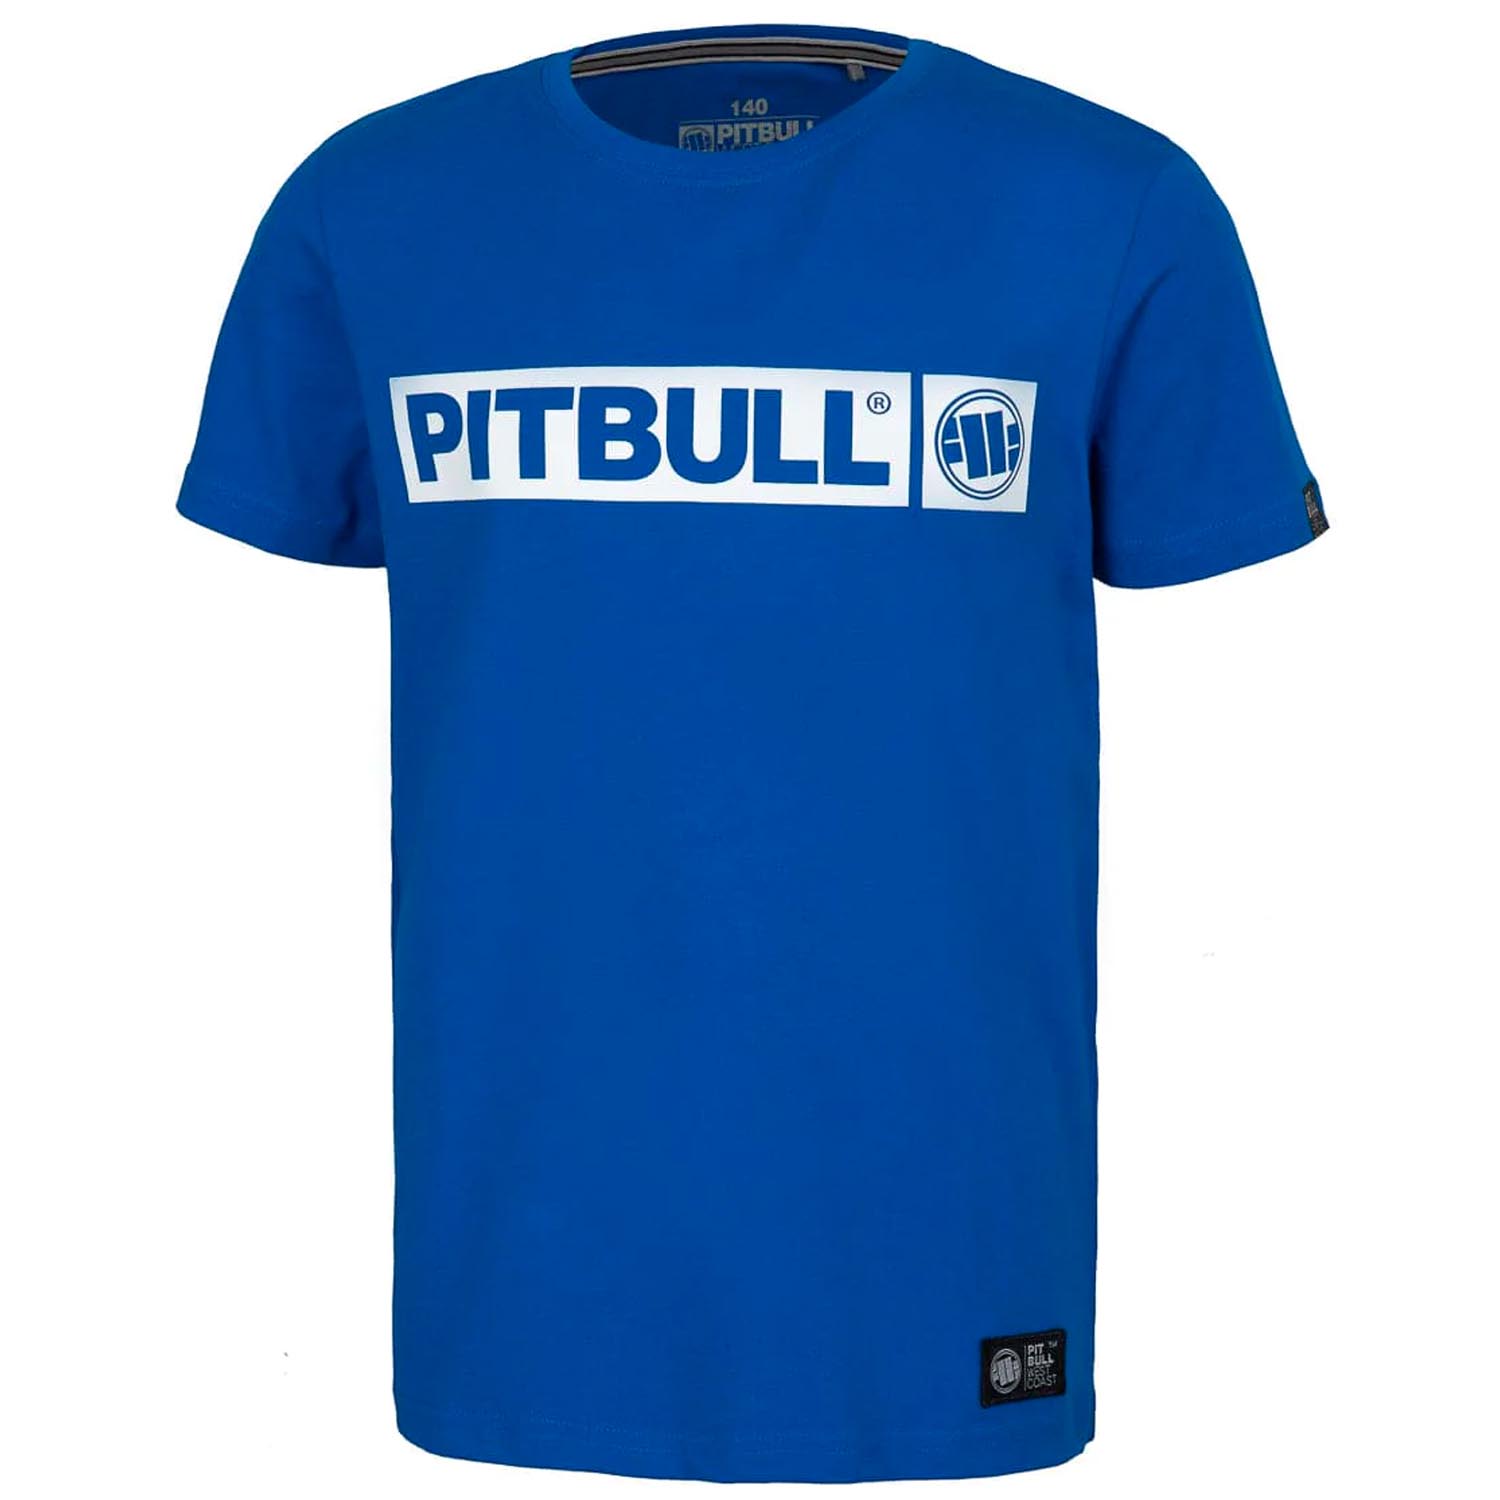 Pit Bull West Coast T-Shirt, Kinder, Hilltop, blau